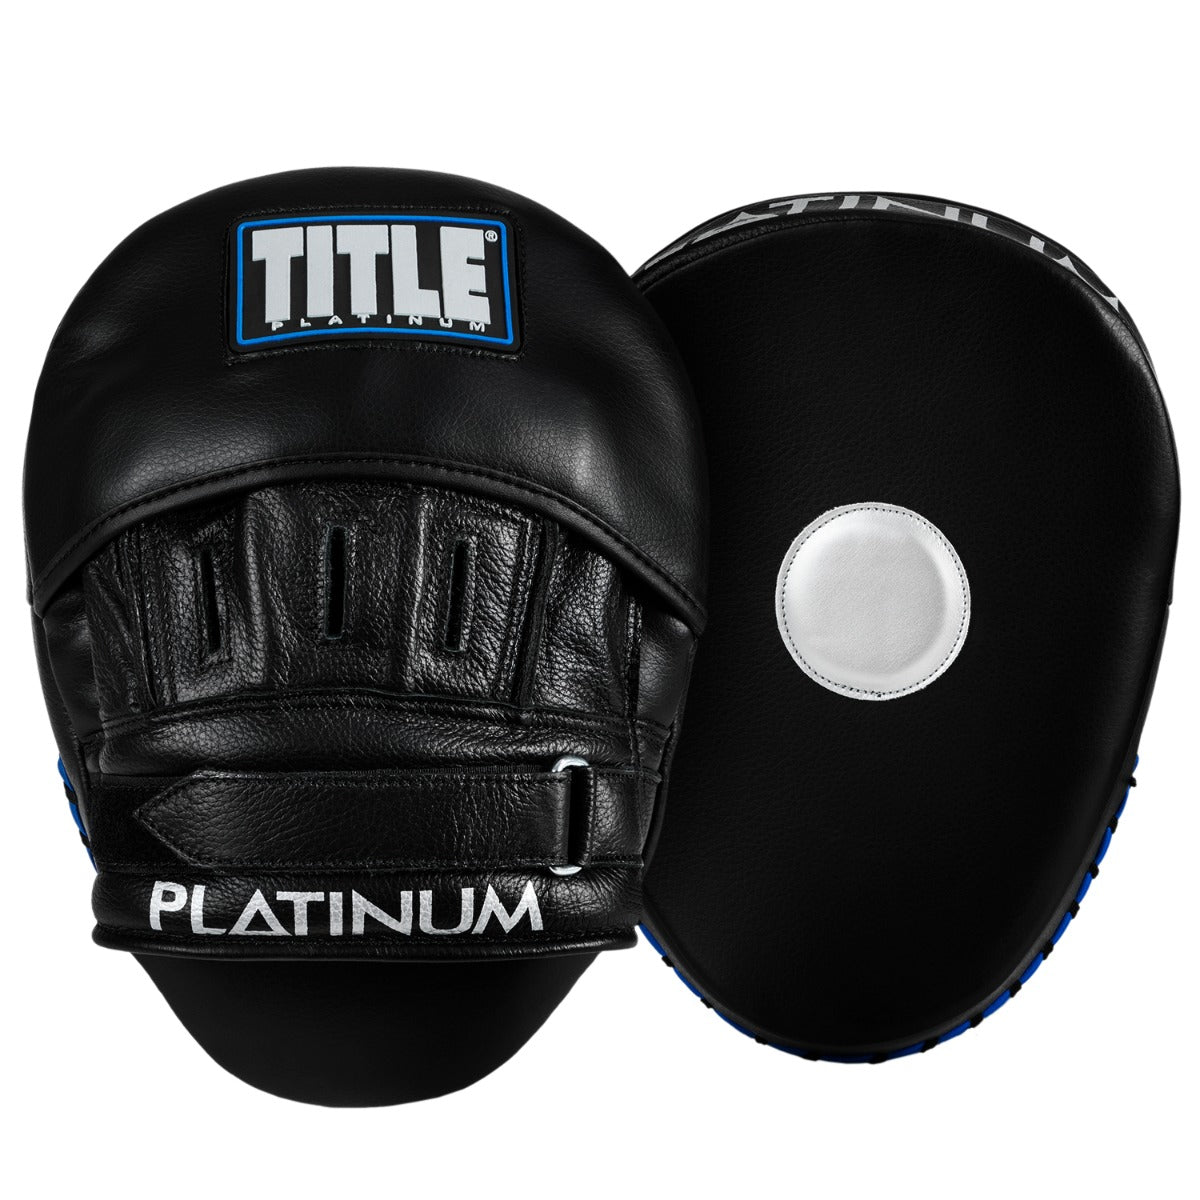 TITLE Platinum Punch Mitts 2.0